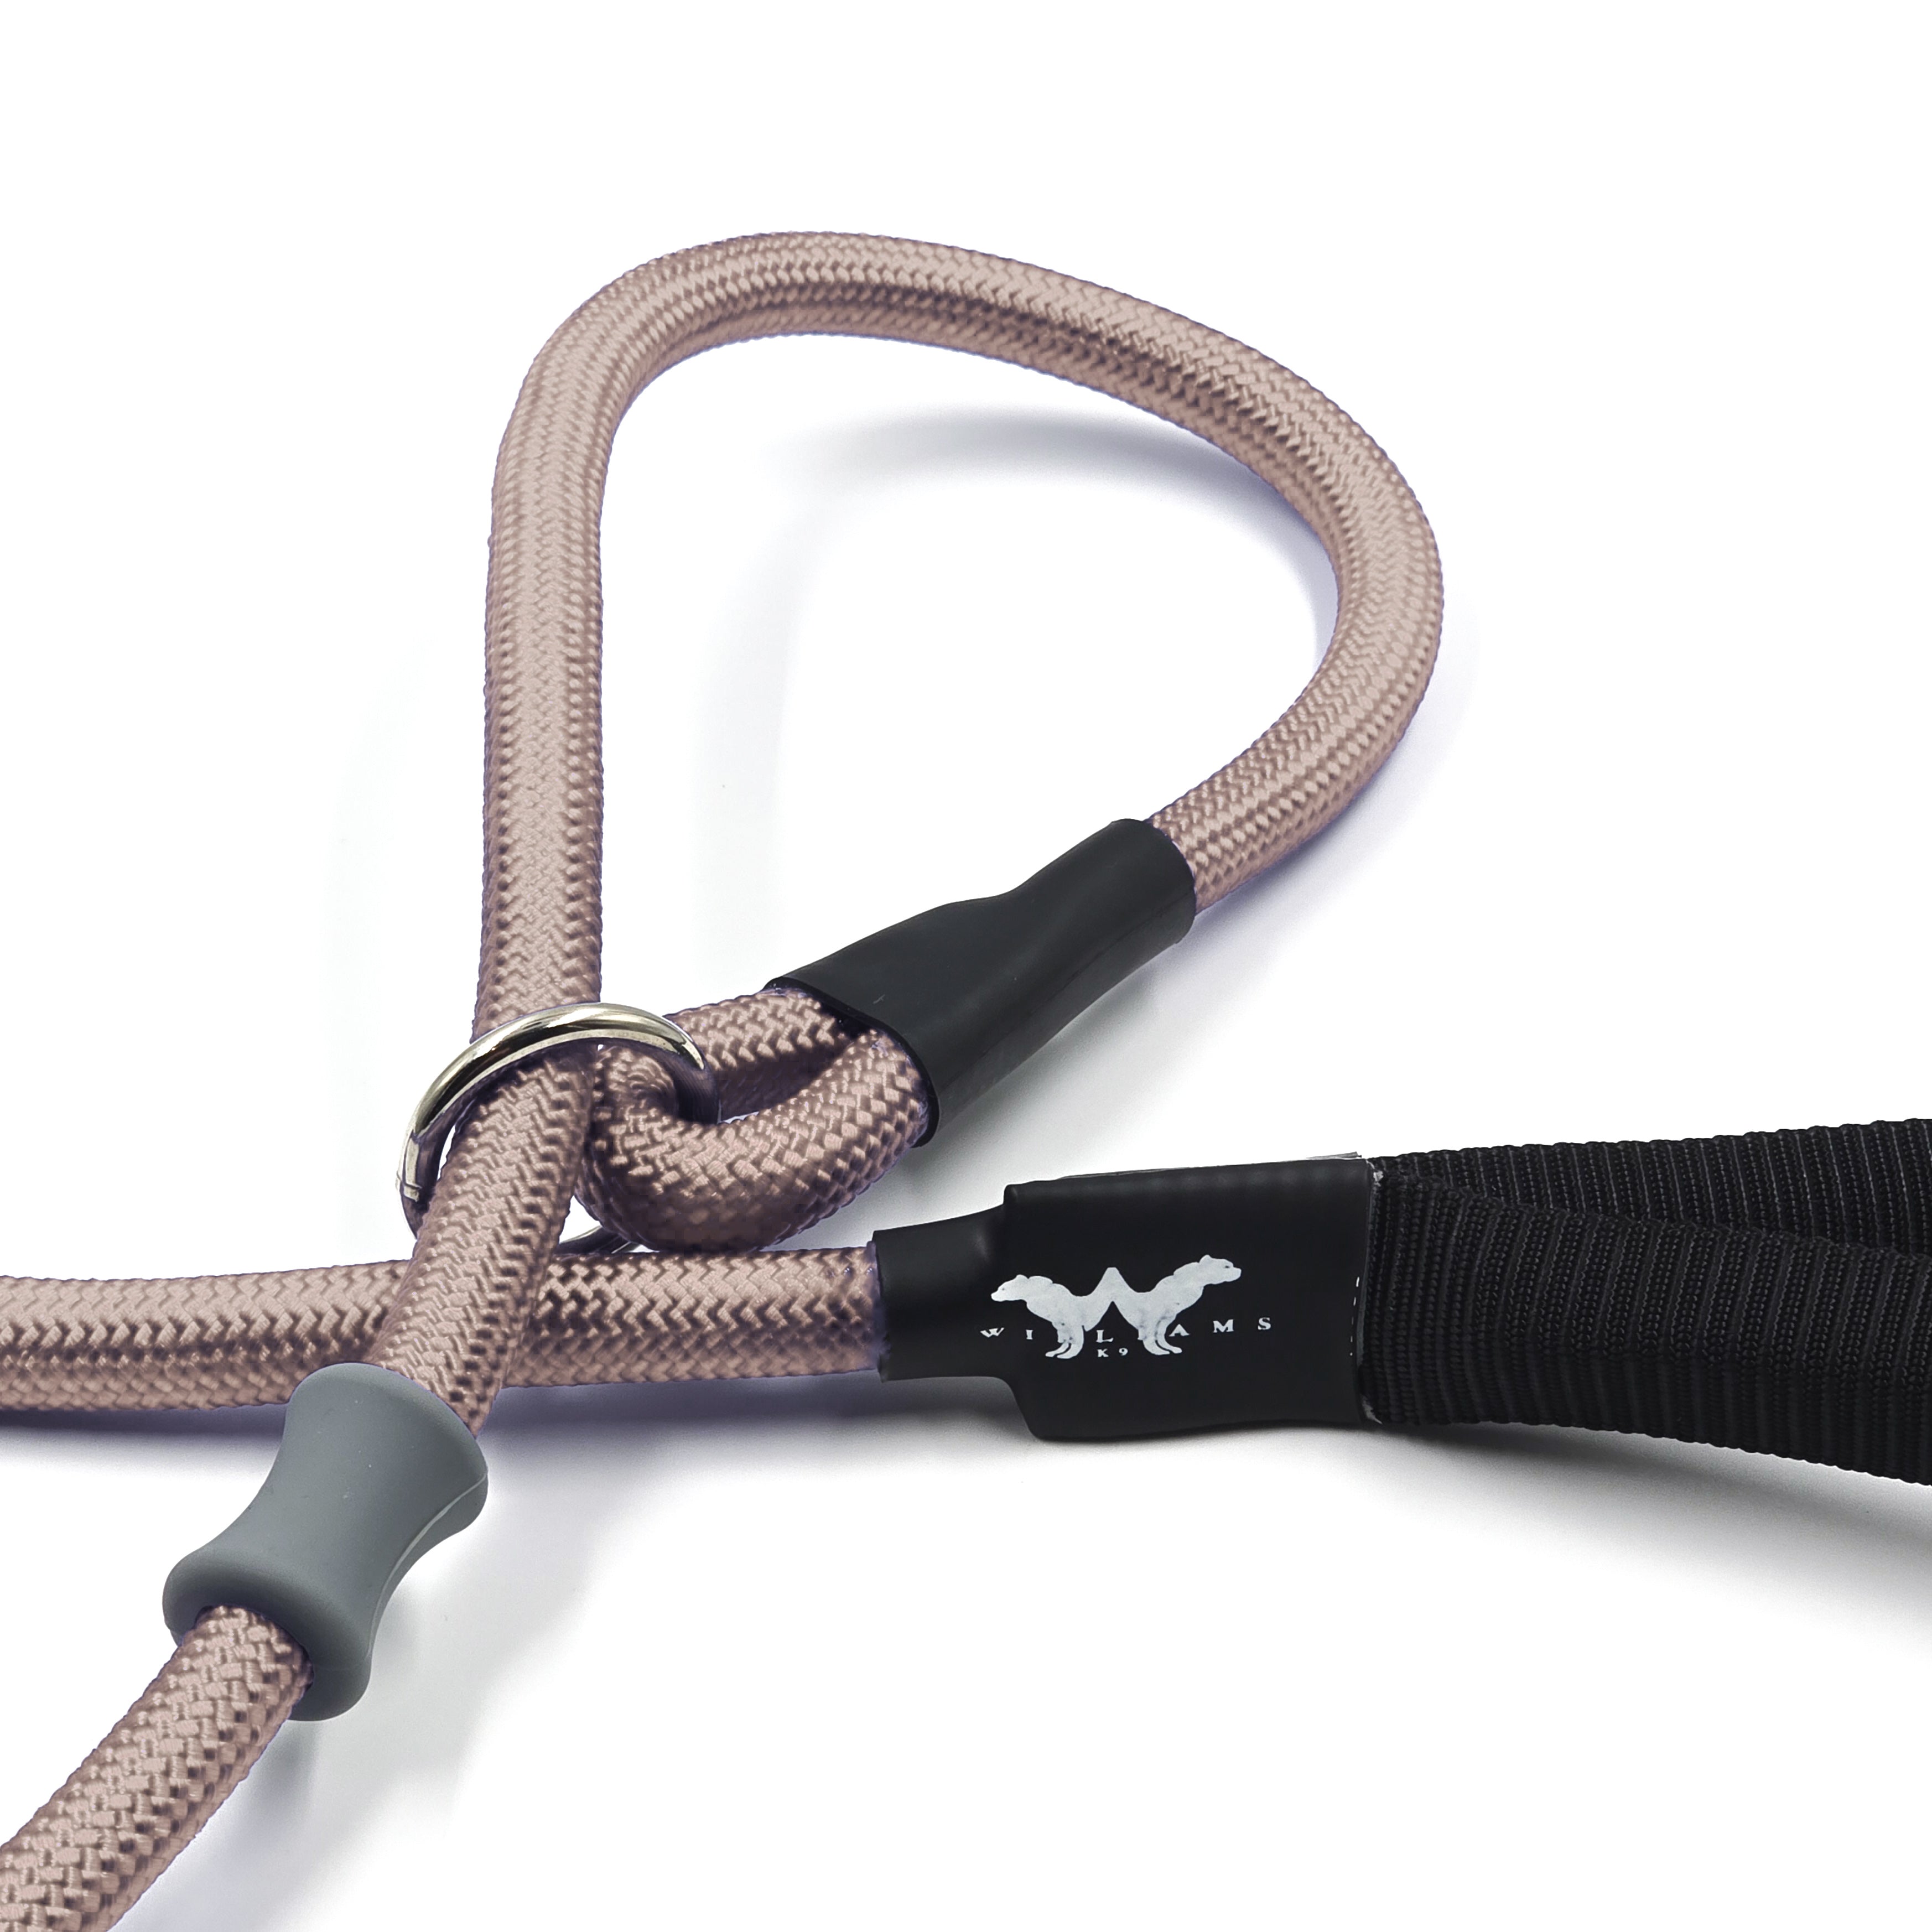 Military Tan Slip Lead | With Adjustable Collar Plug and Flex Nylon material